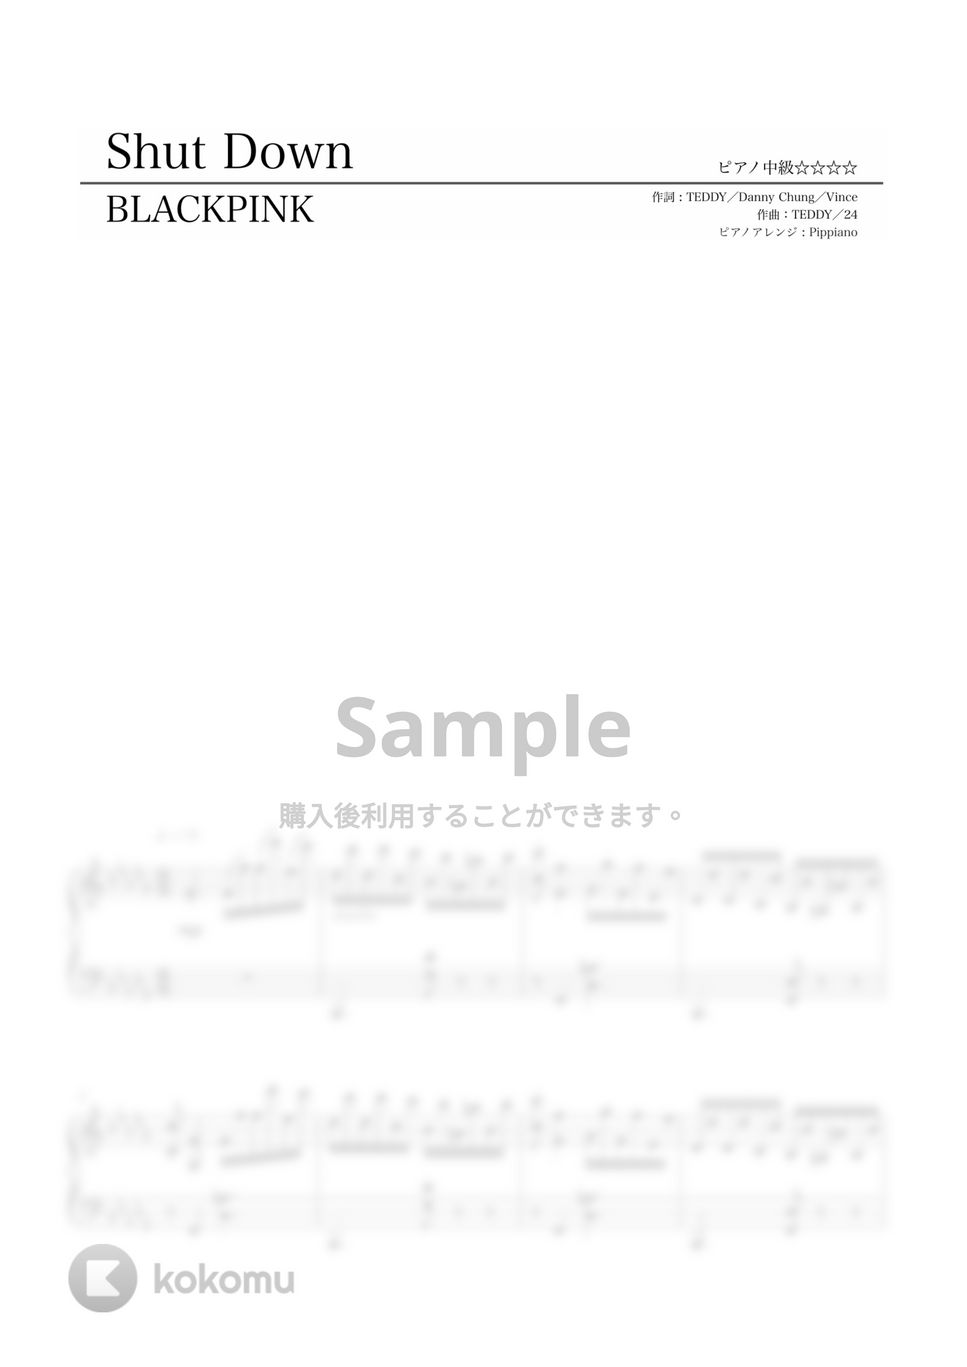 BLACKPINK - Shut Down by Pippiano